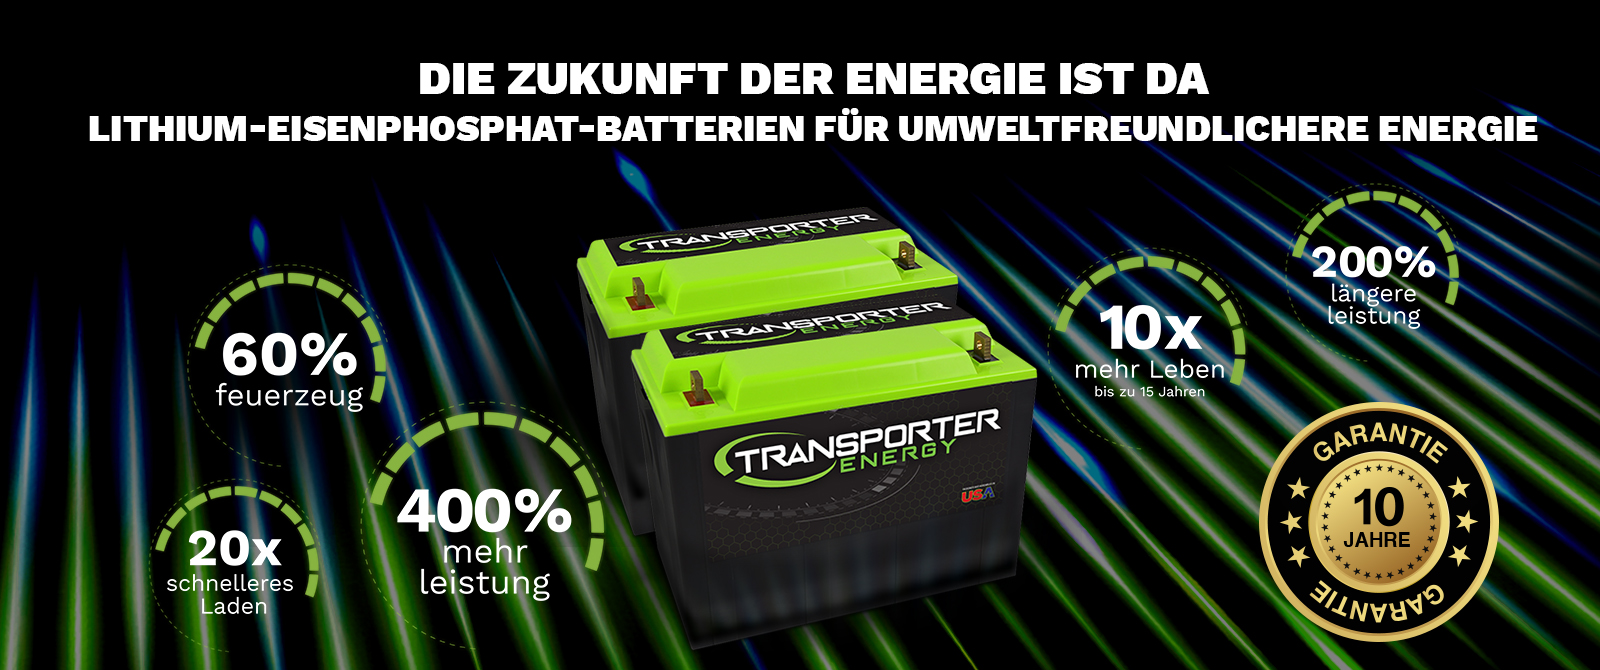 Benefits of Transporter Energy lithium iron batteries